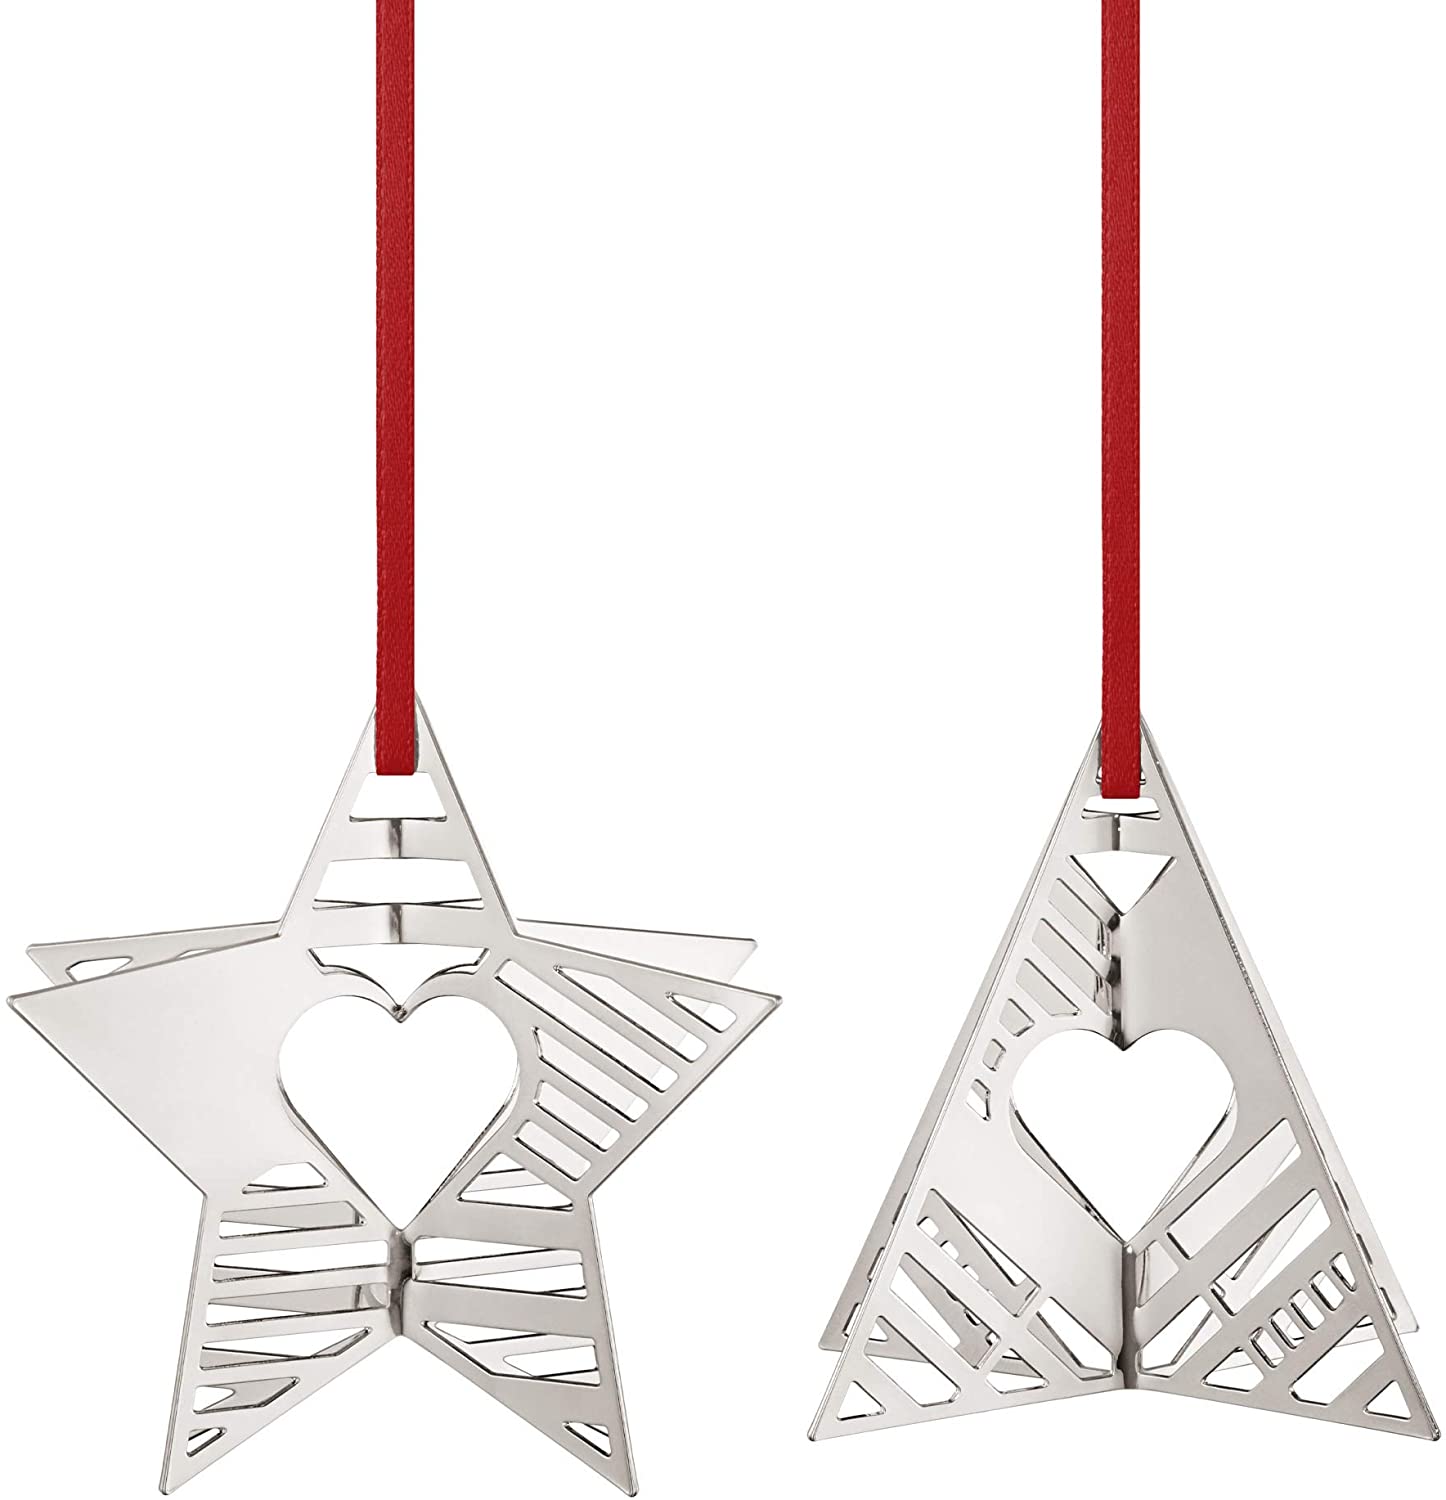 Georg Jensen 2019 Star and Tree Christmas Ornaments - Palladium Plated